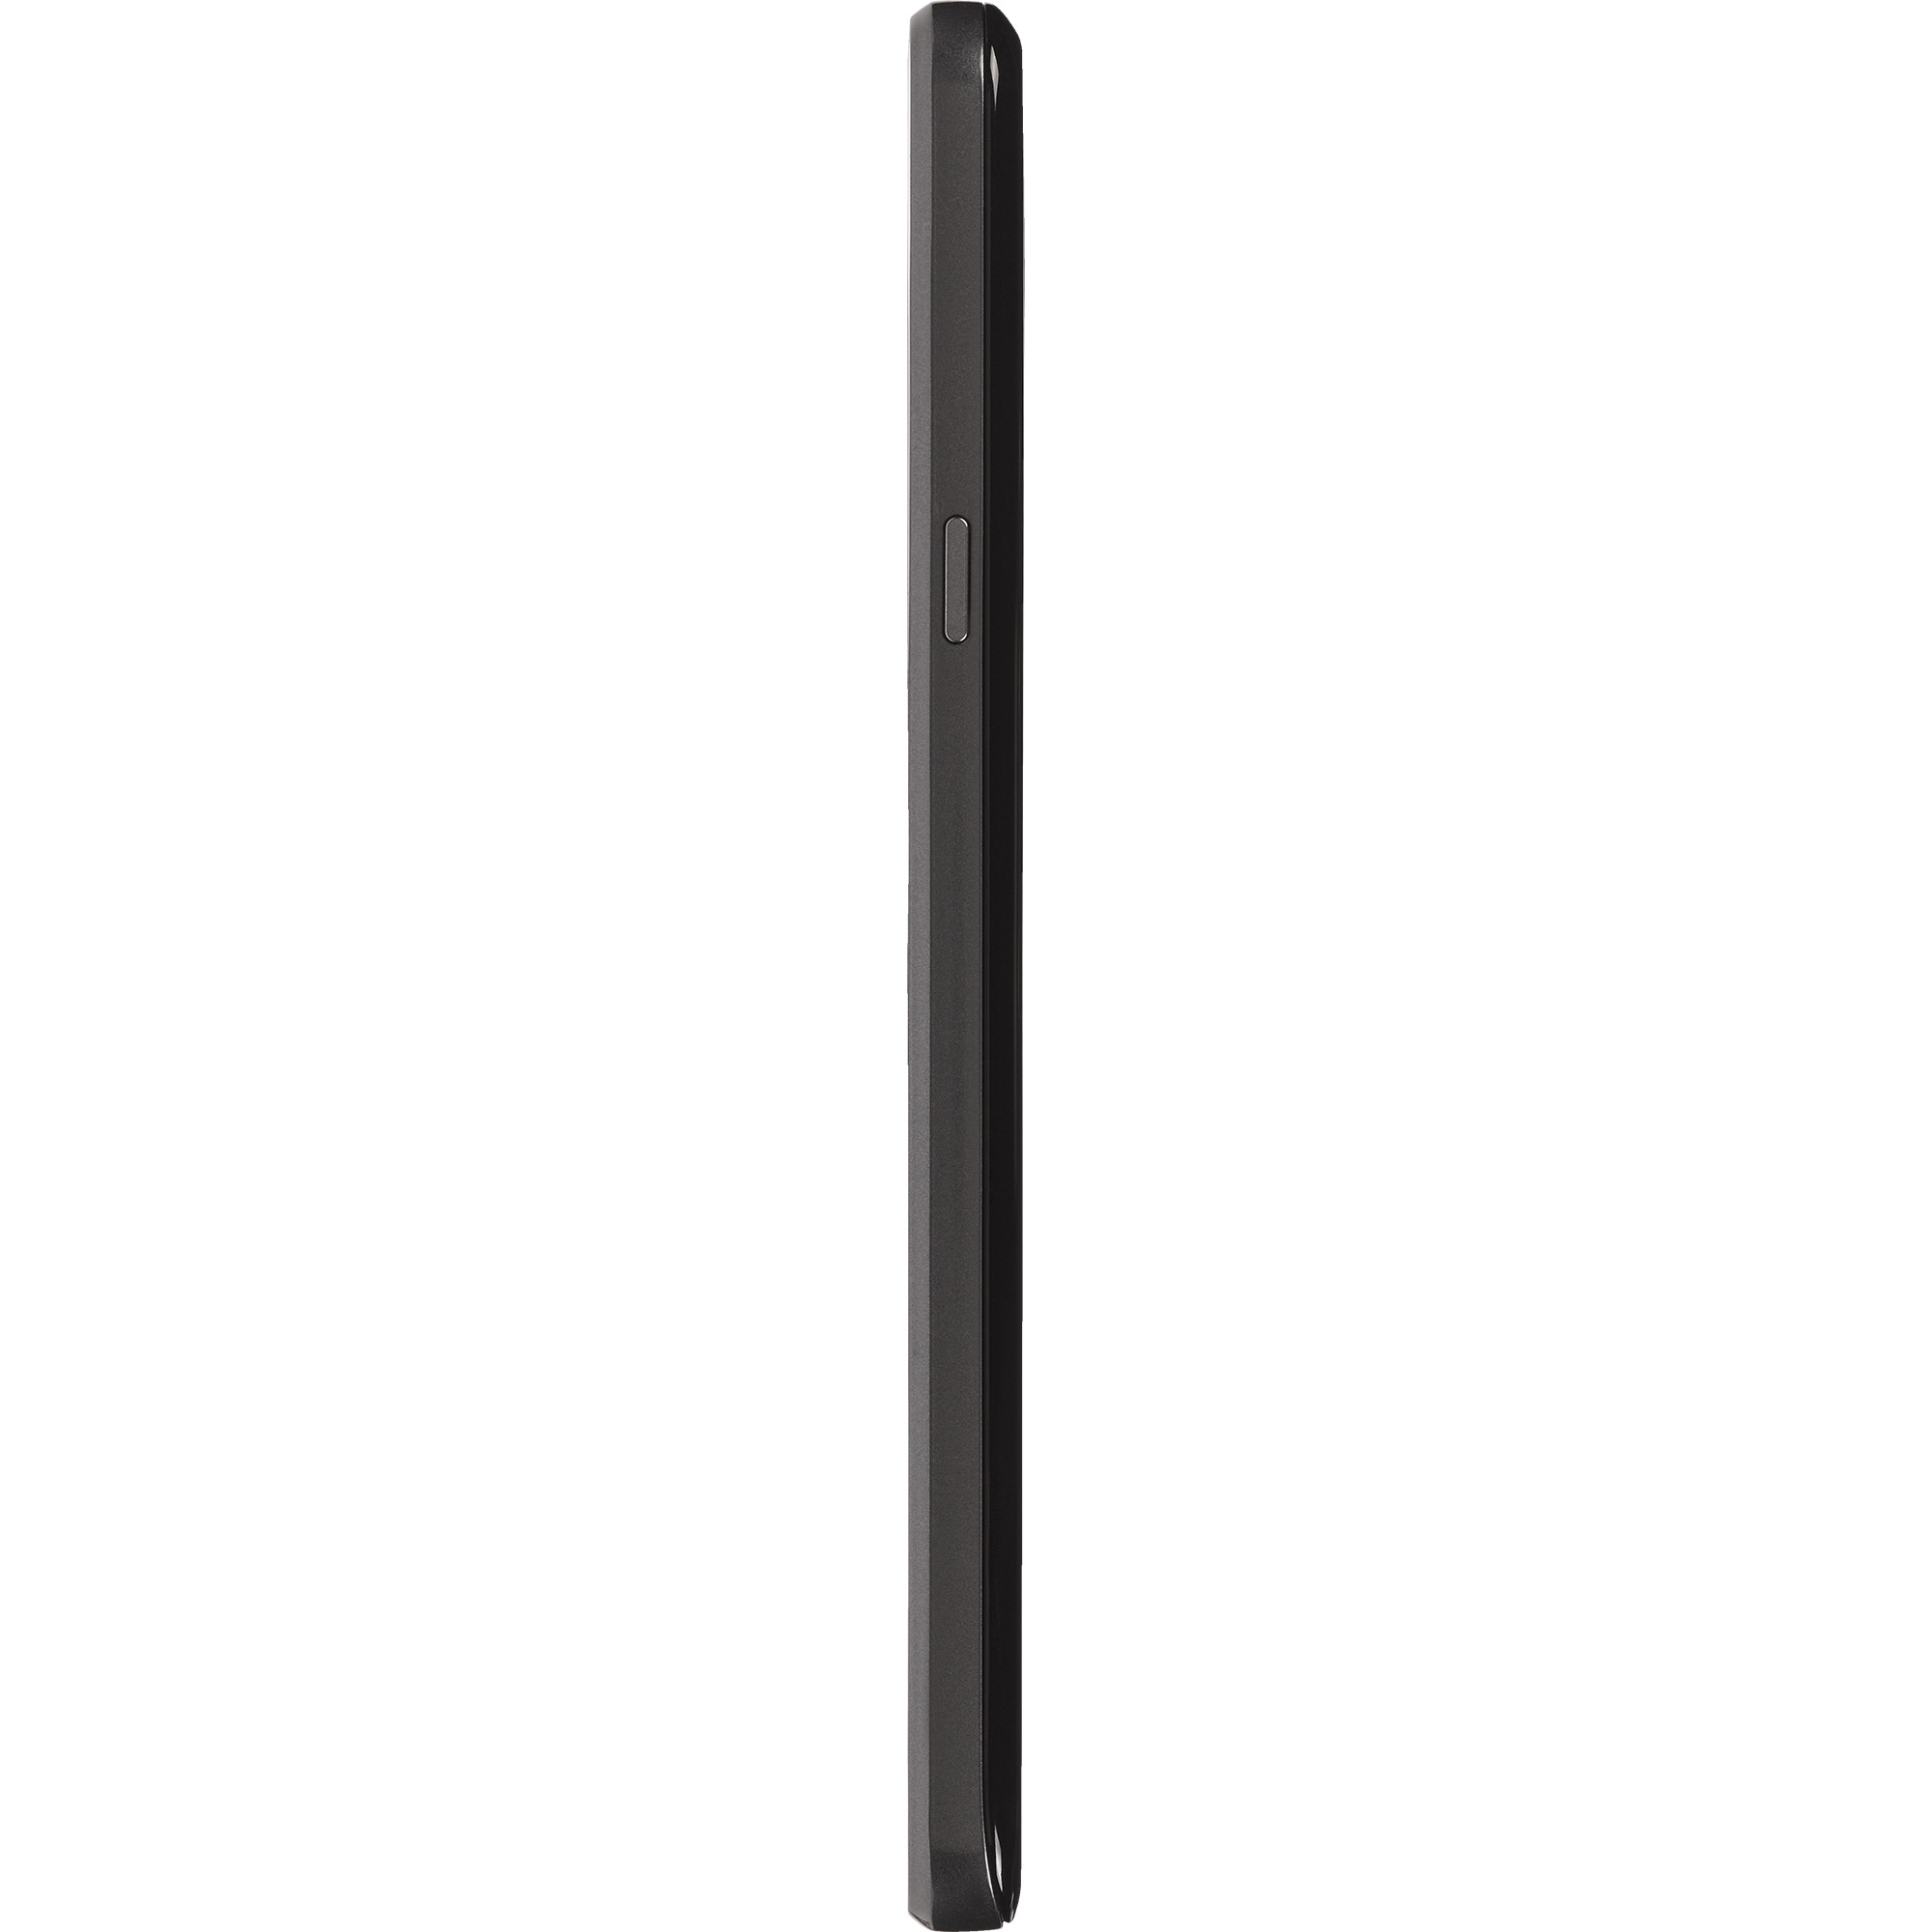 Simple Mobile LG Journey, 16GB, Black - Prepaid Smartphone - image 9 of 9